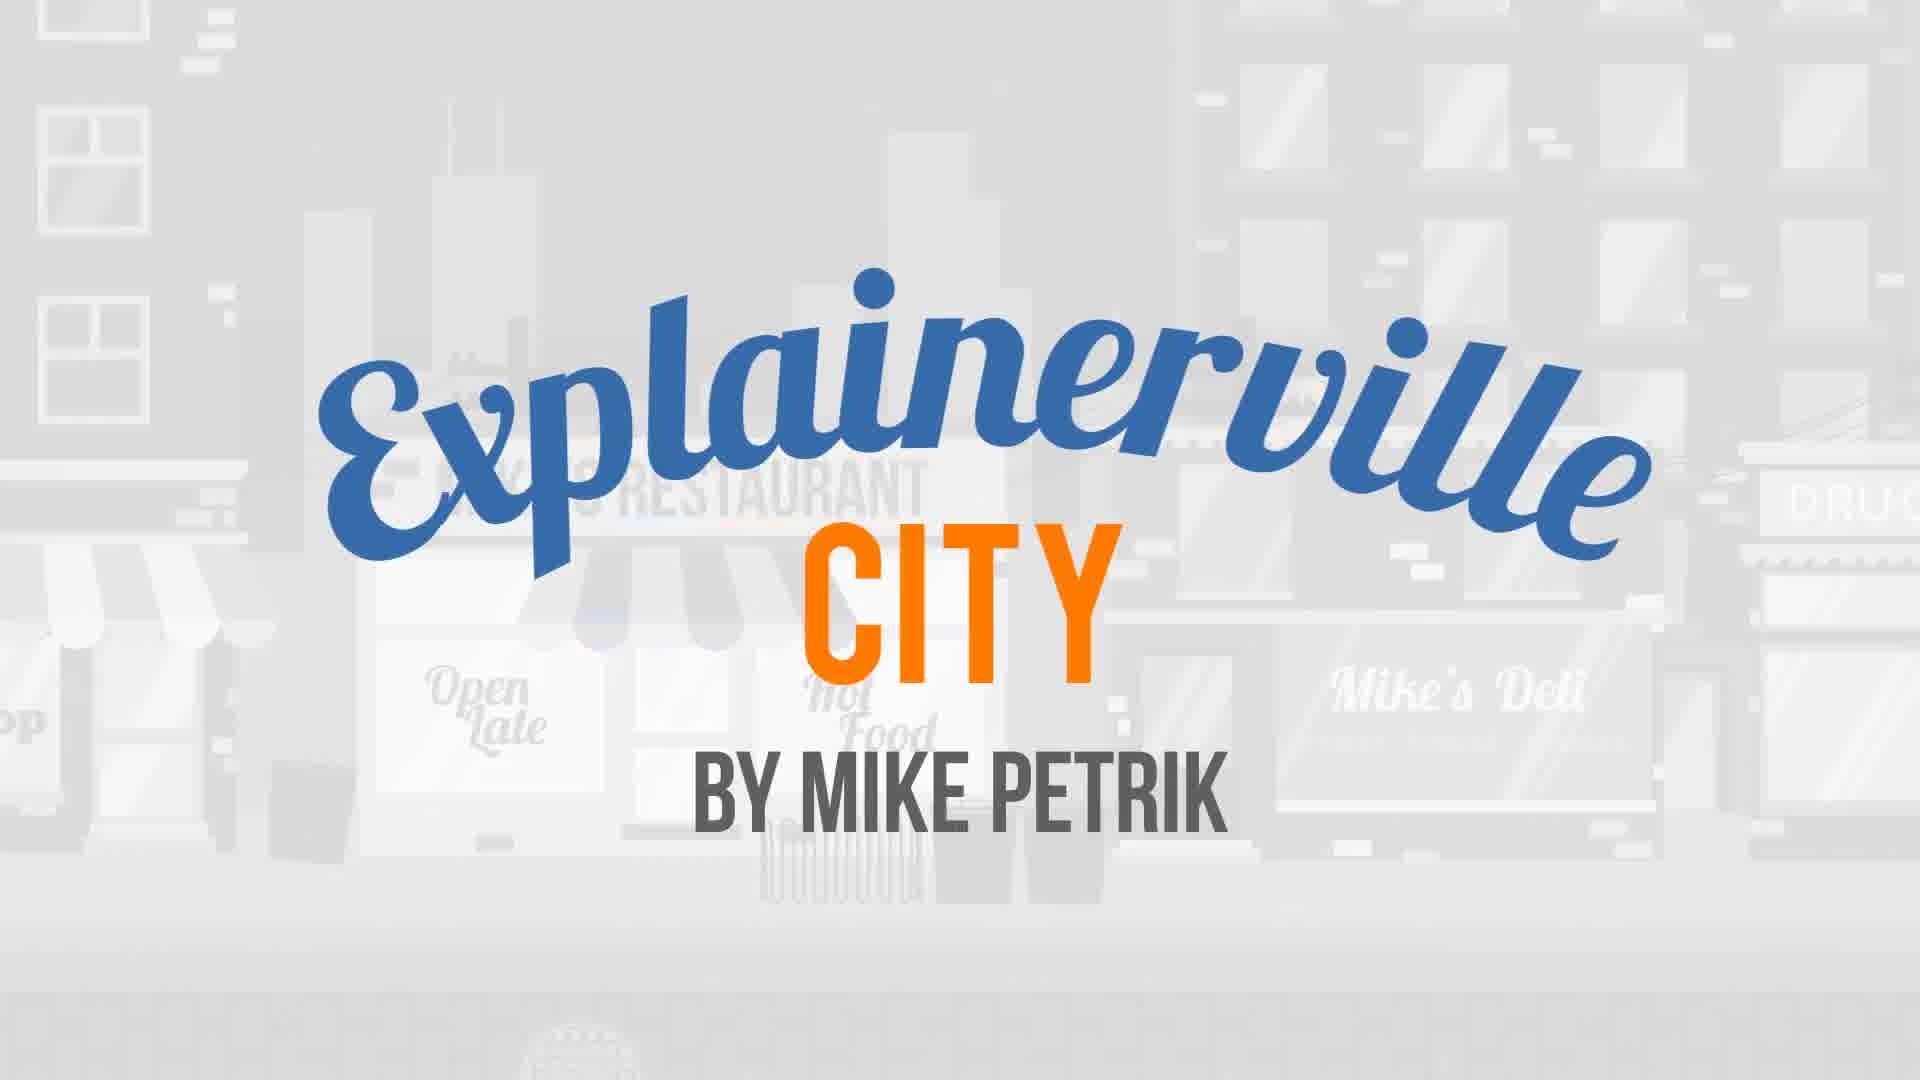 Explainerville City - Download Videohive 6750947